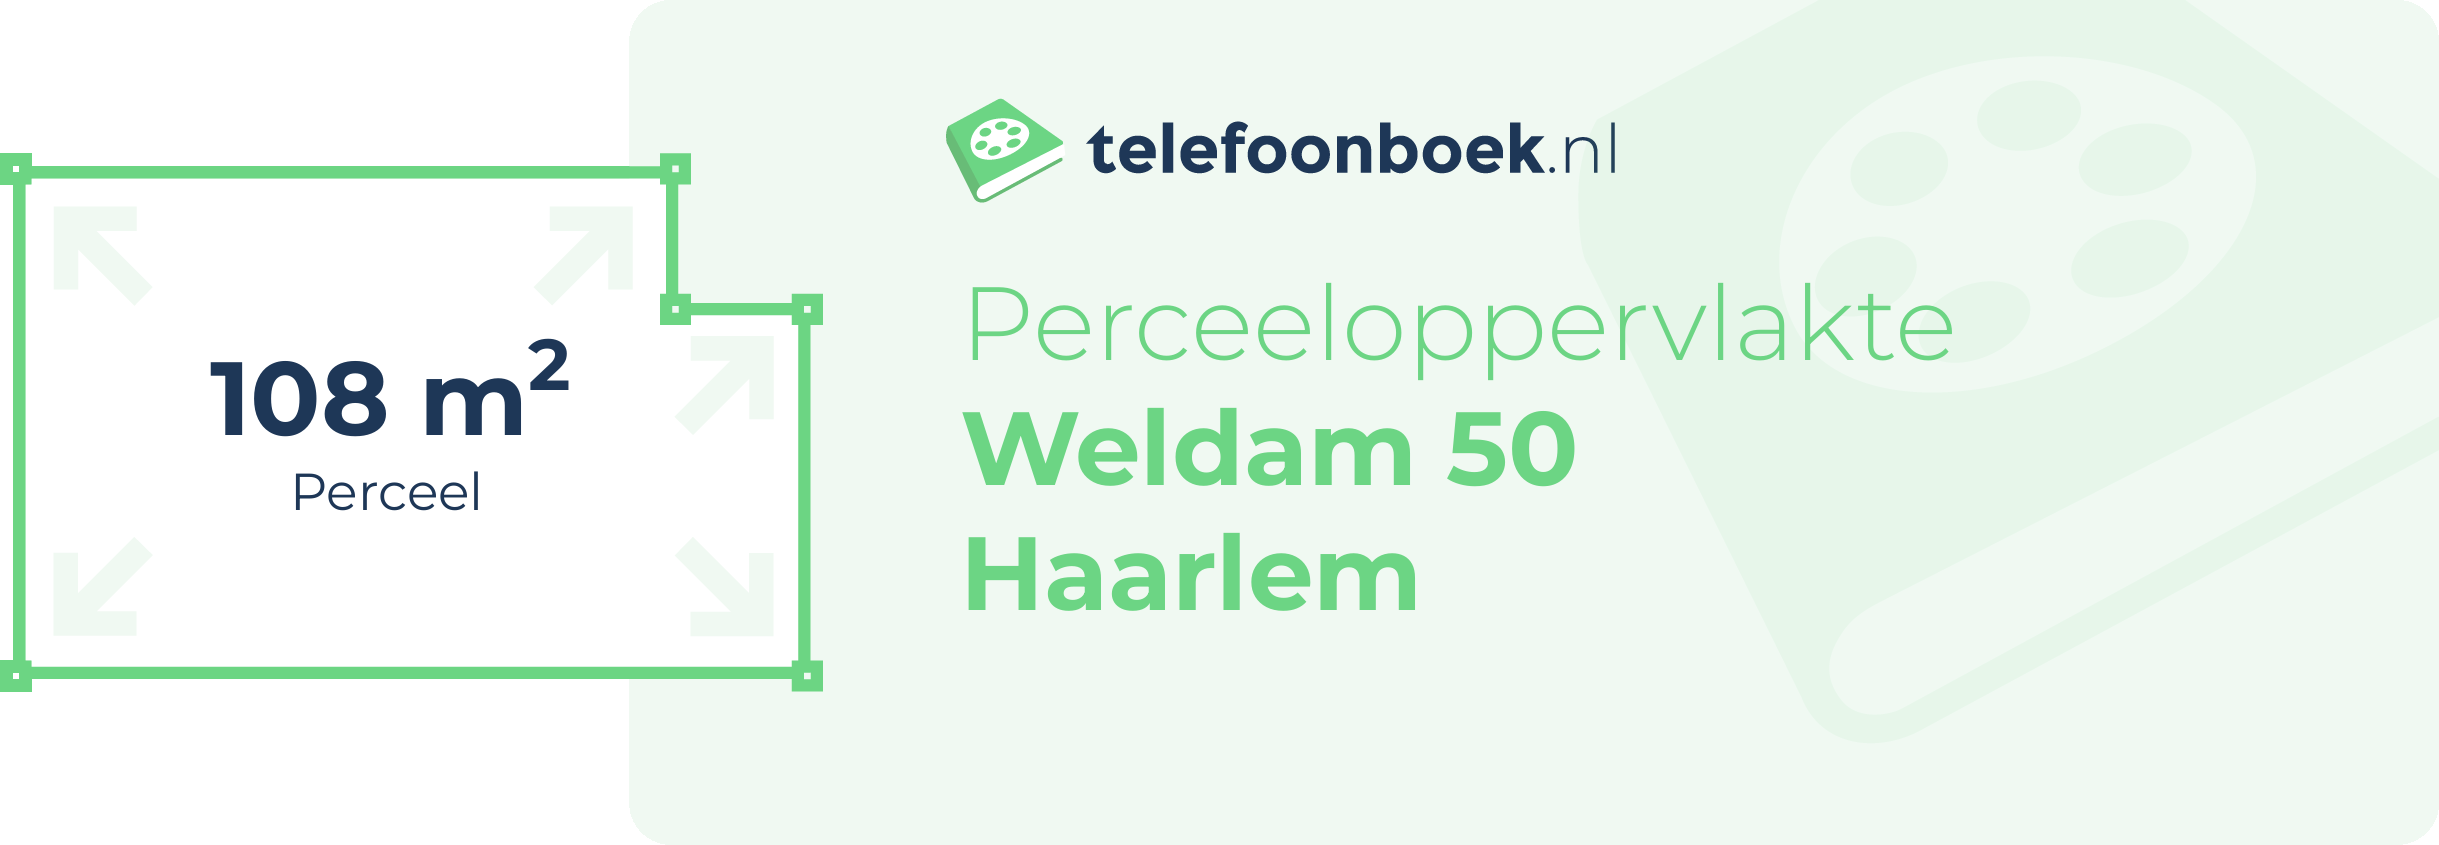 Perceeloppervlakte Weldam 50 Haarlem